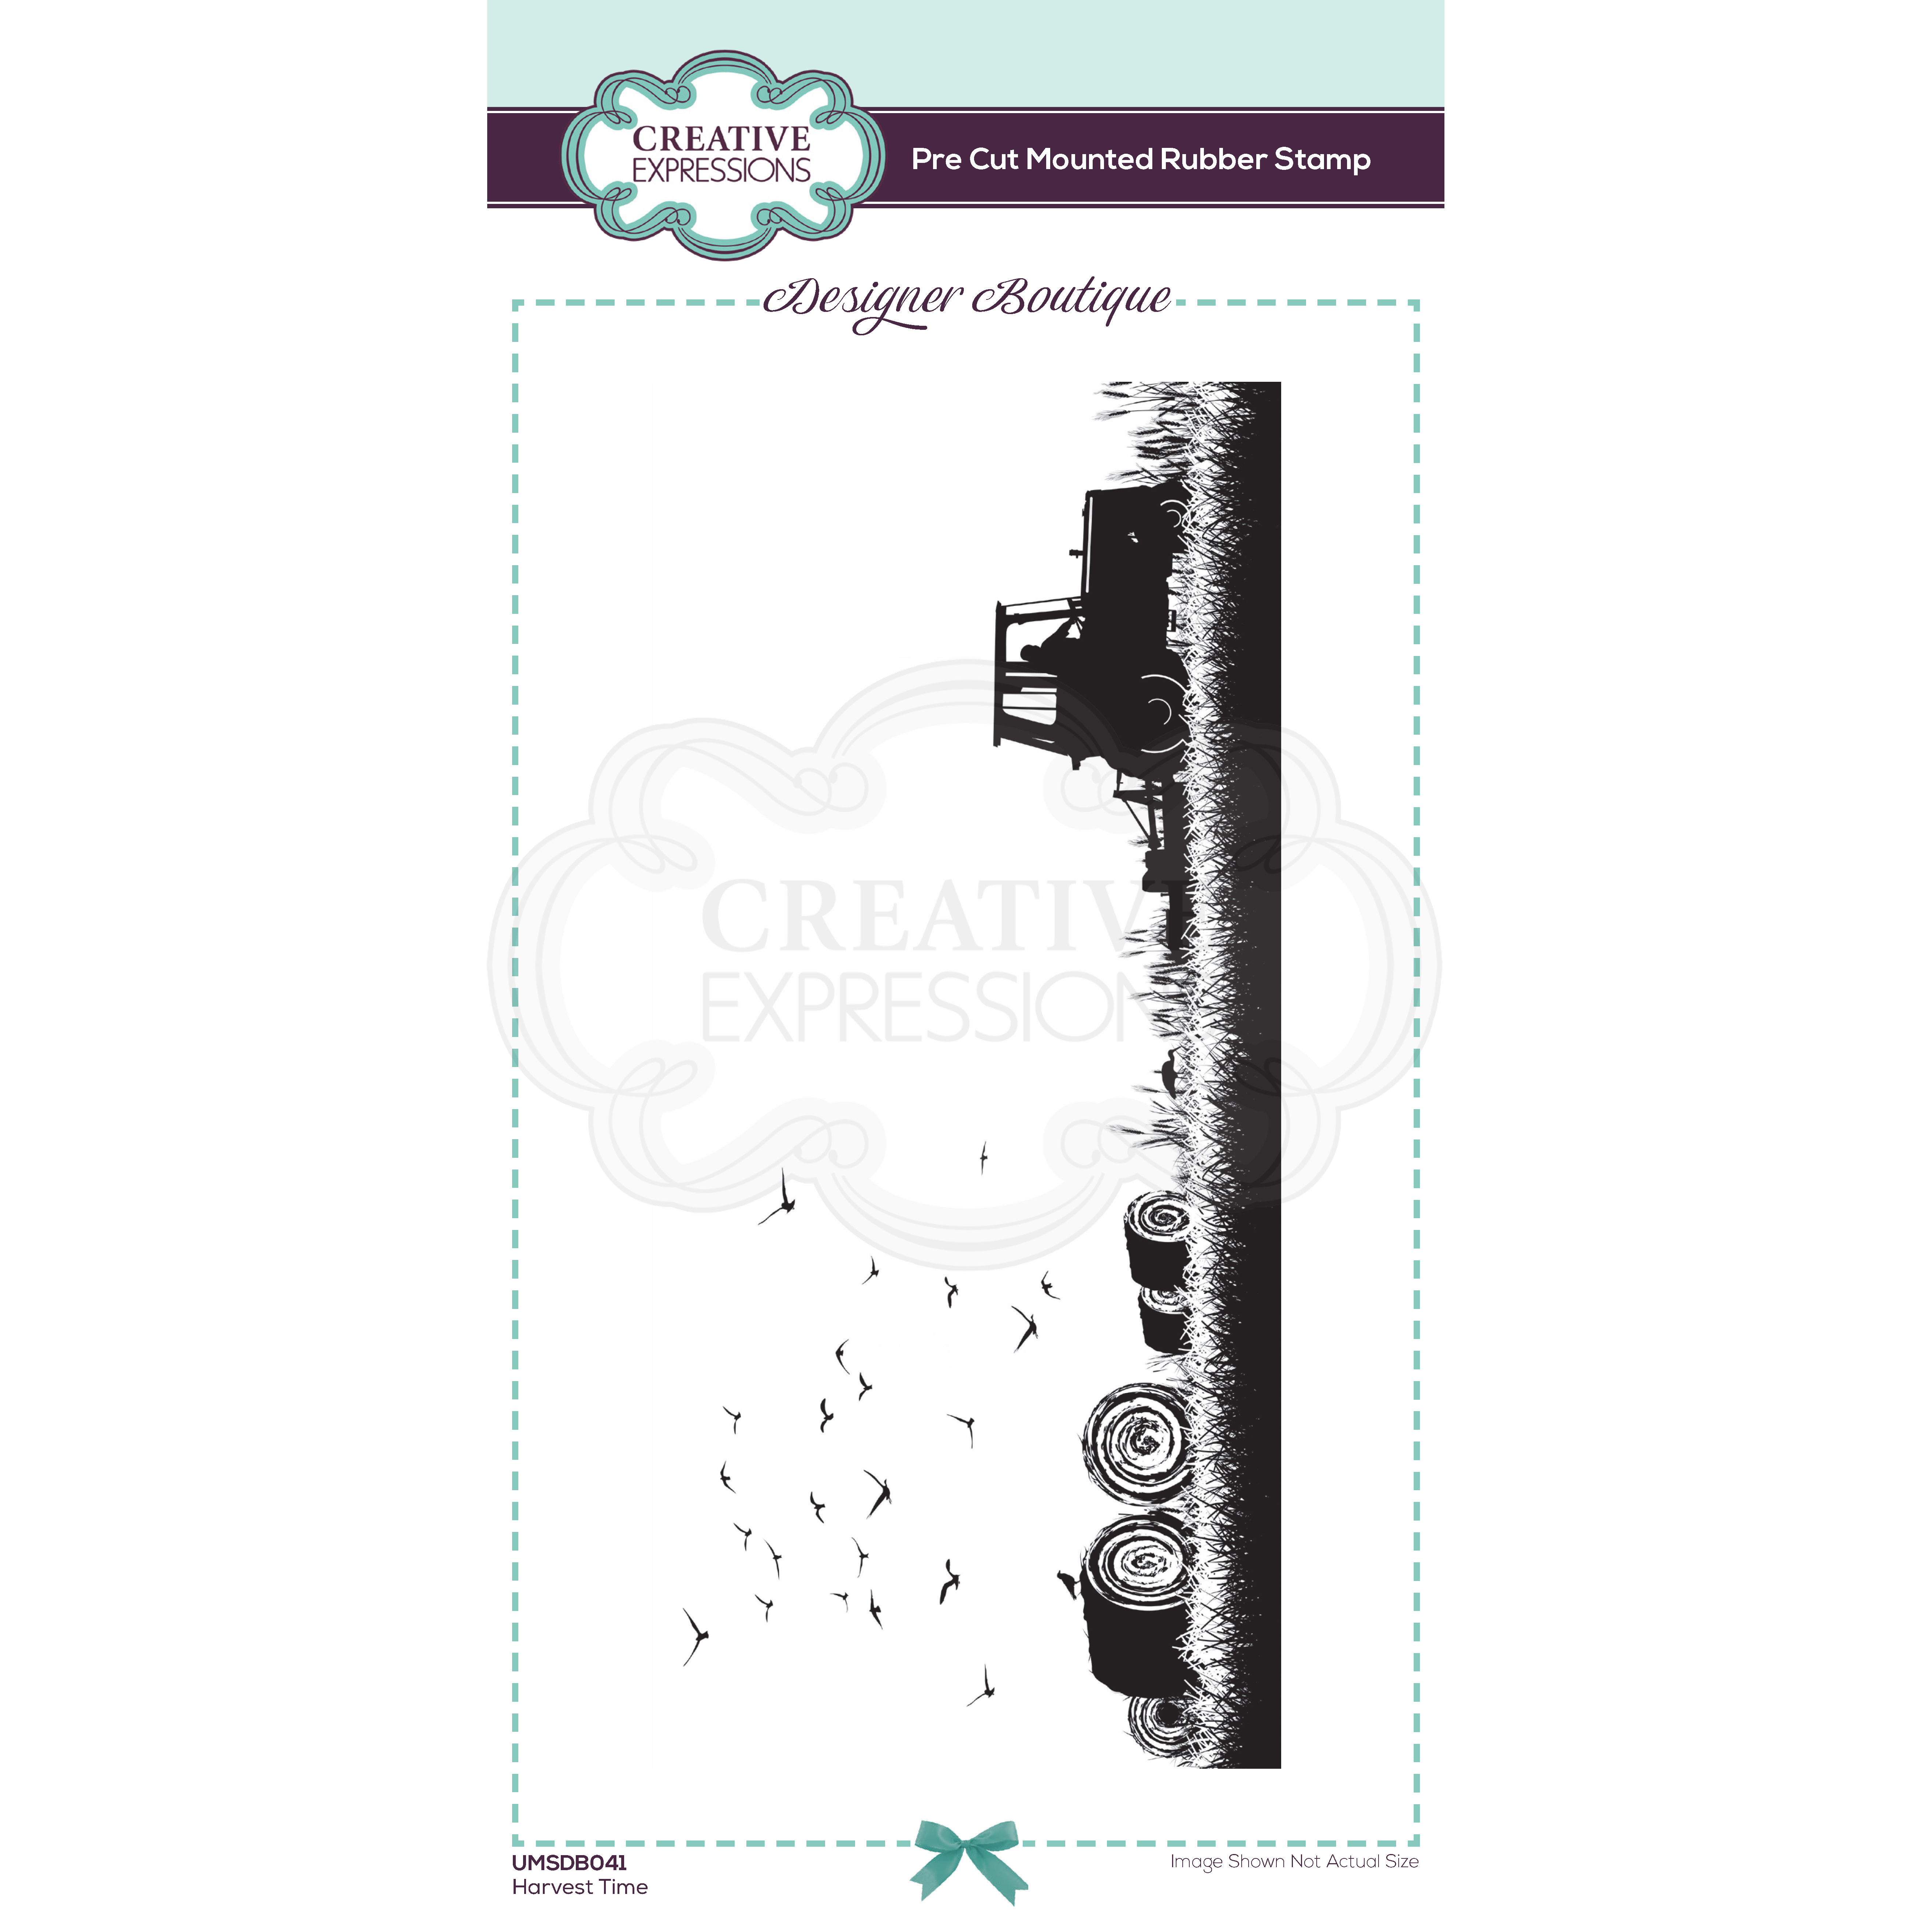 Creative Expressions • Designer boutique voorgesneden mounted rubberen stempel Harvest time